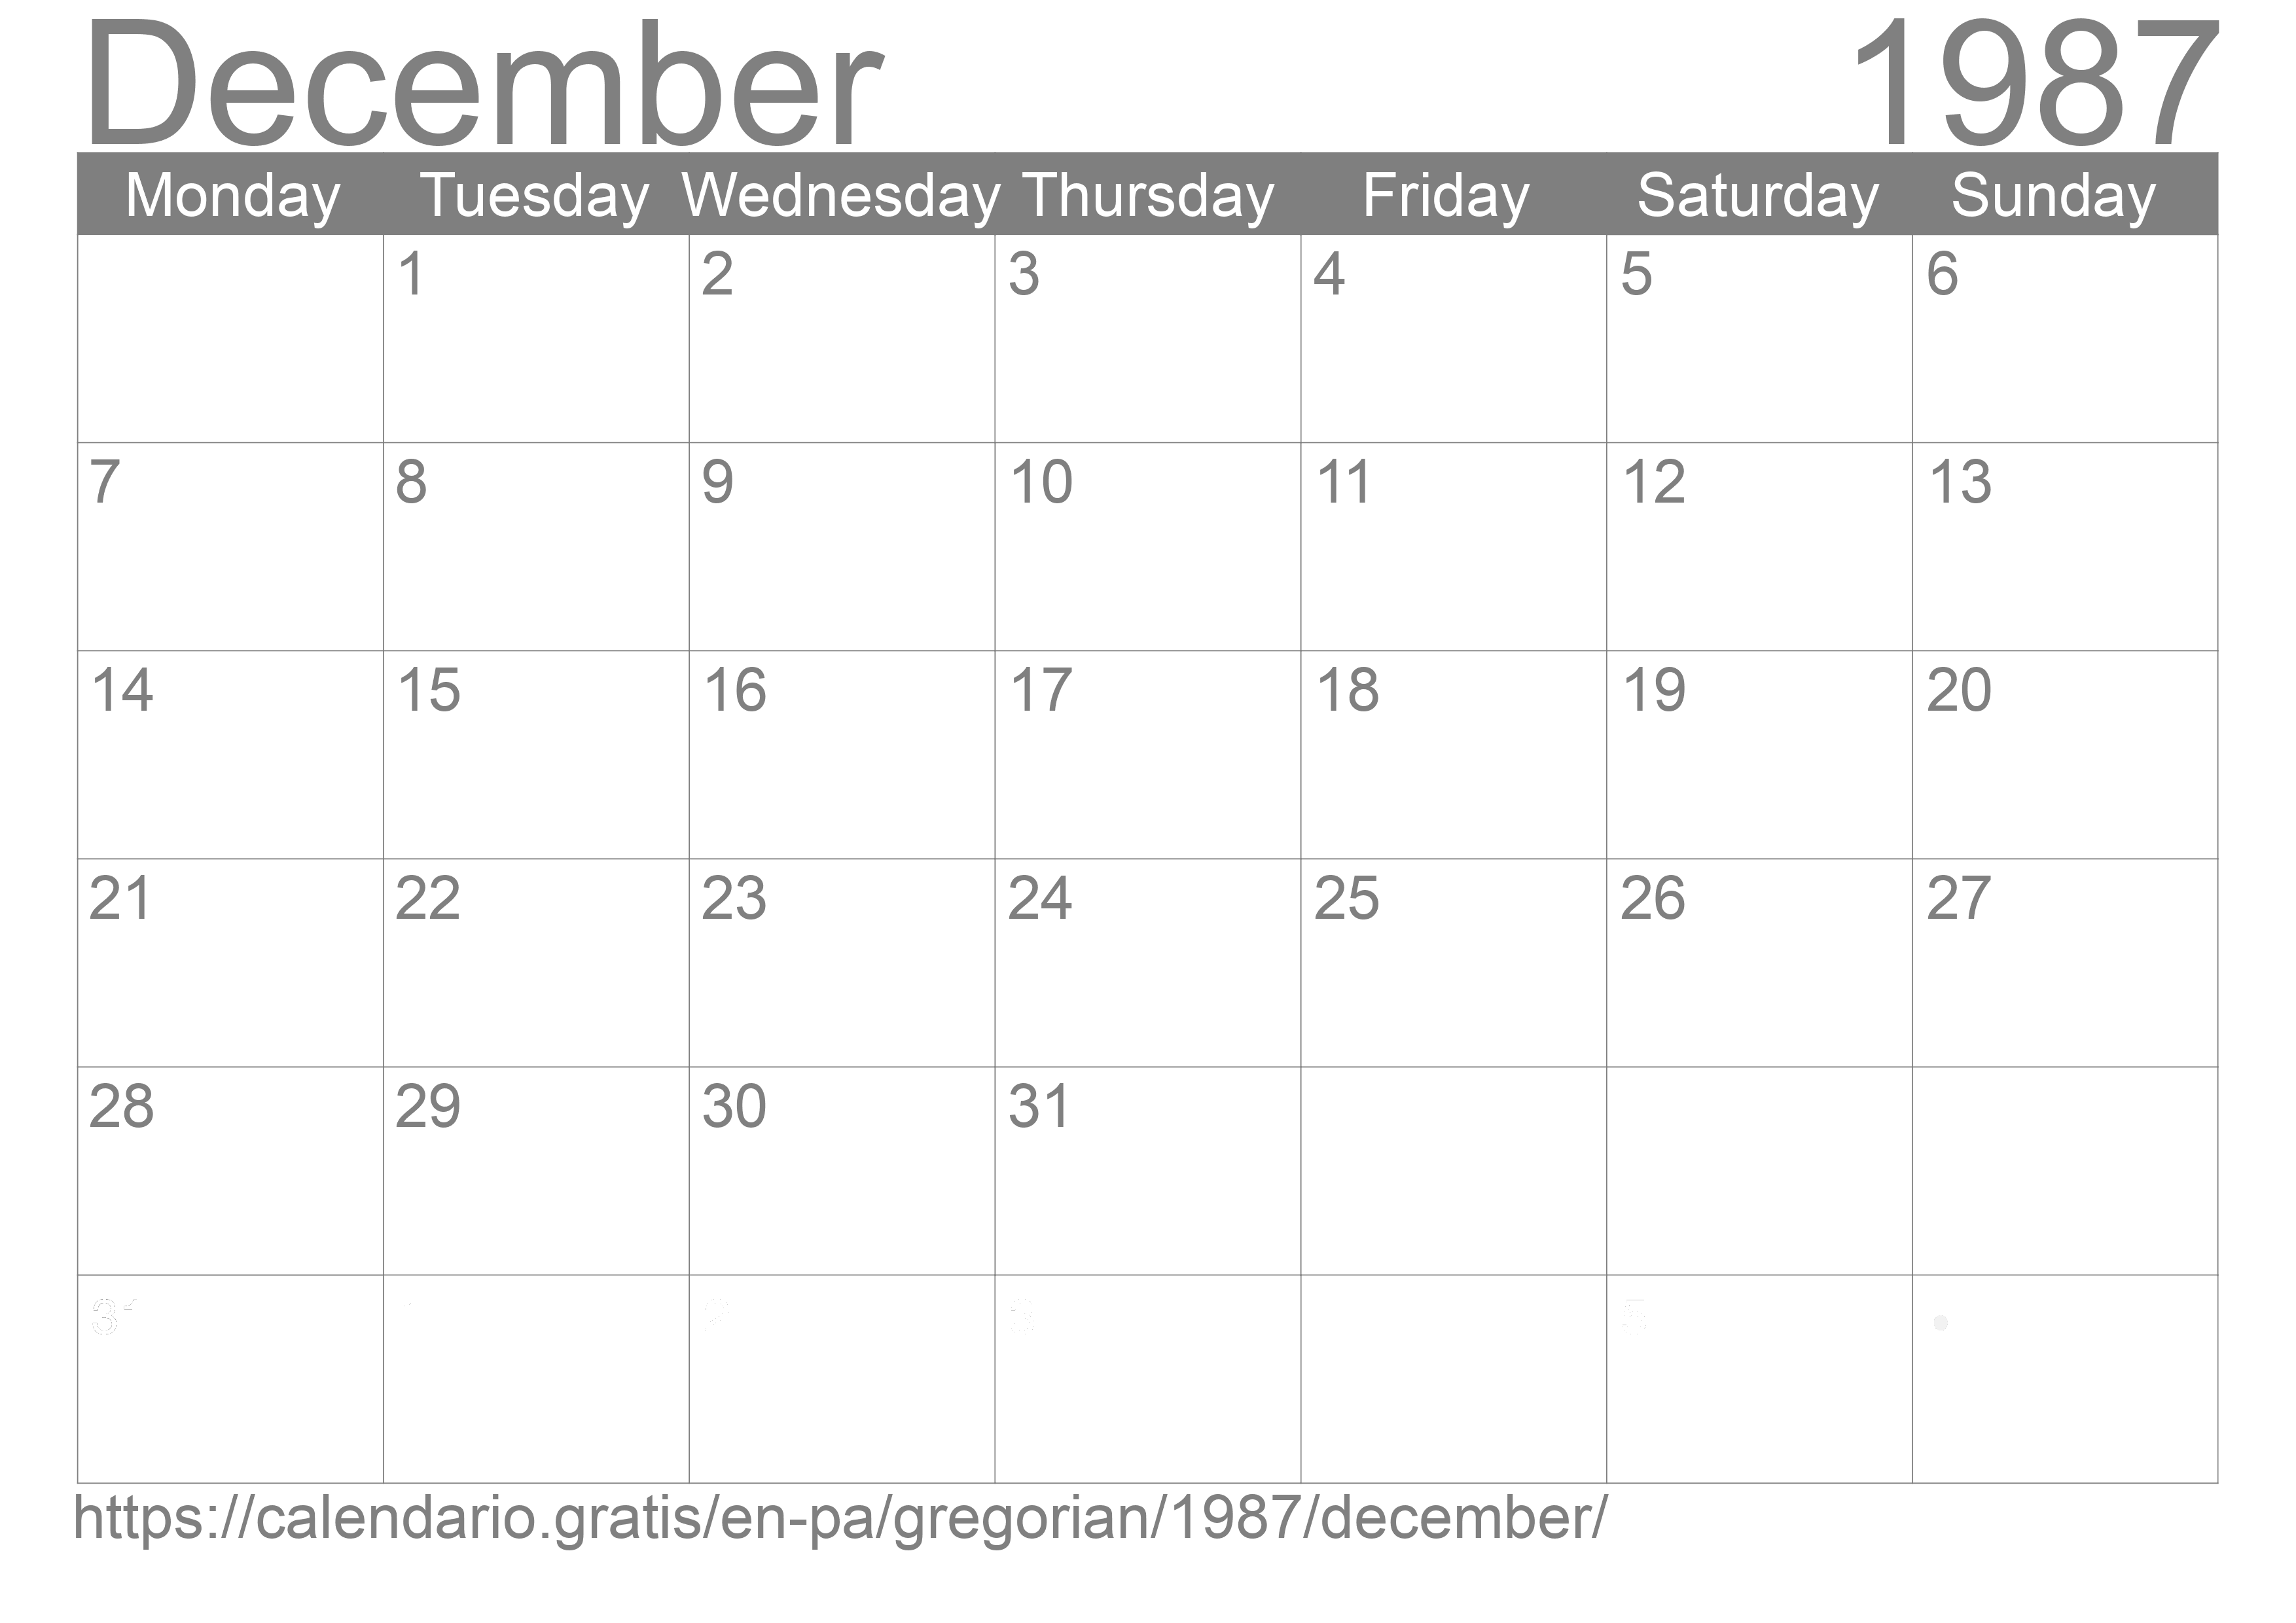 Calendar December 1987 to print